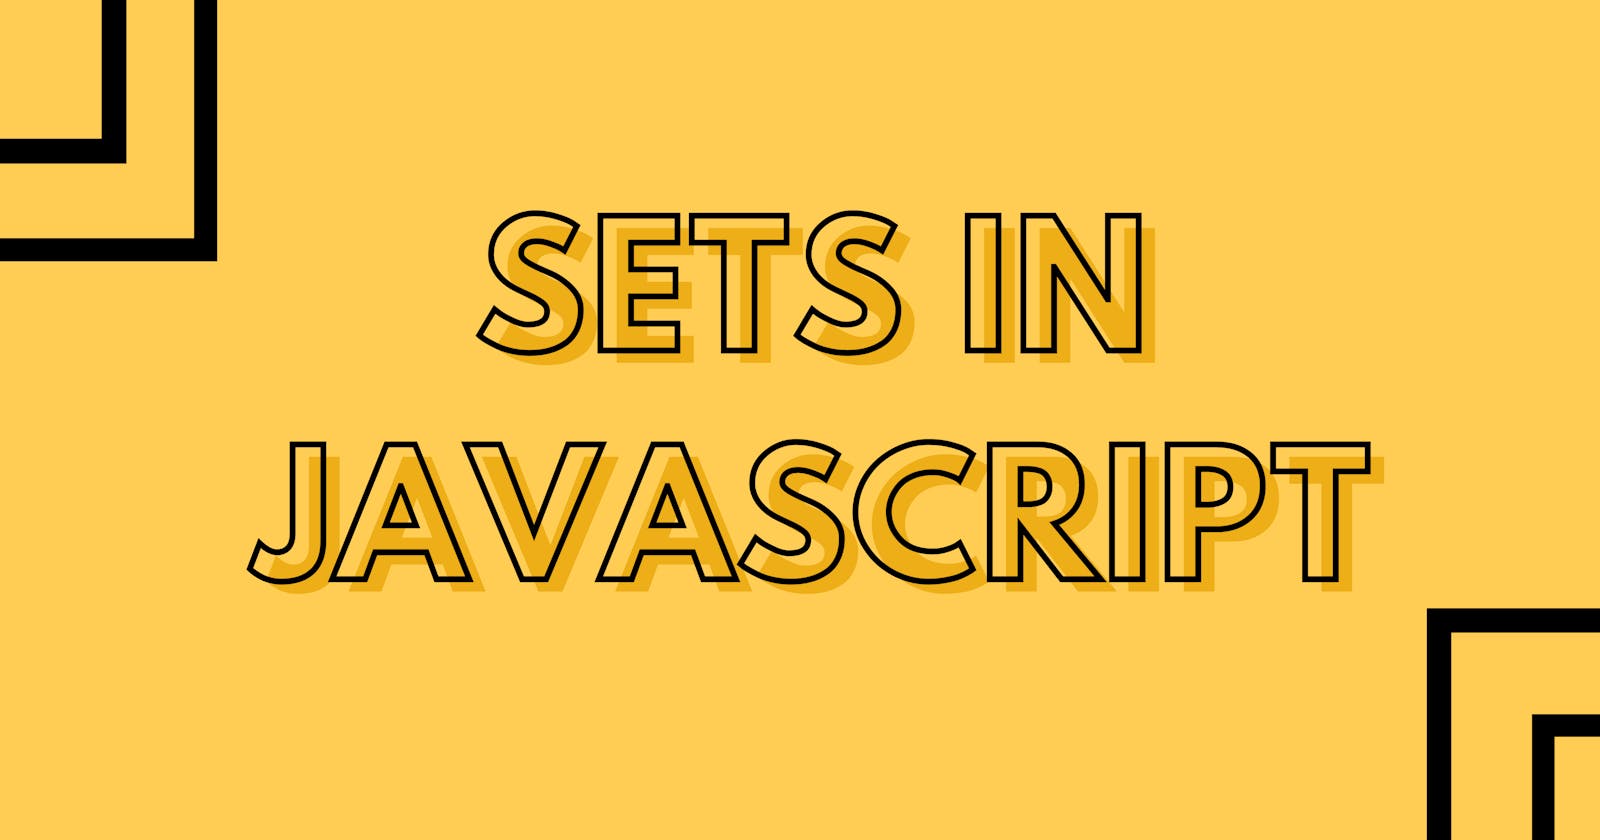 Sets in JavaScript